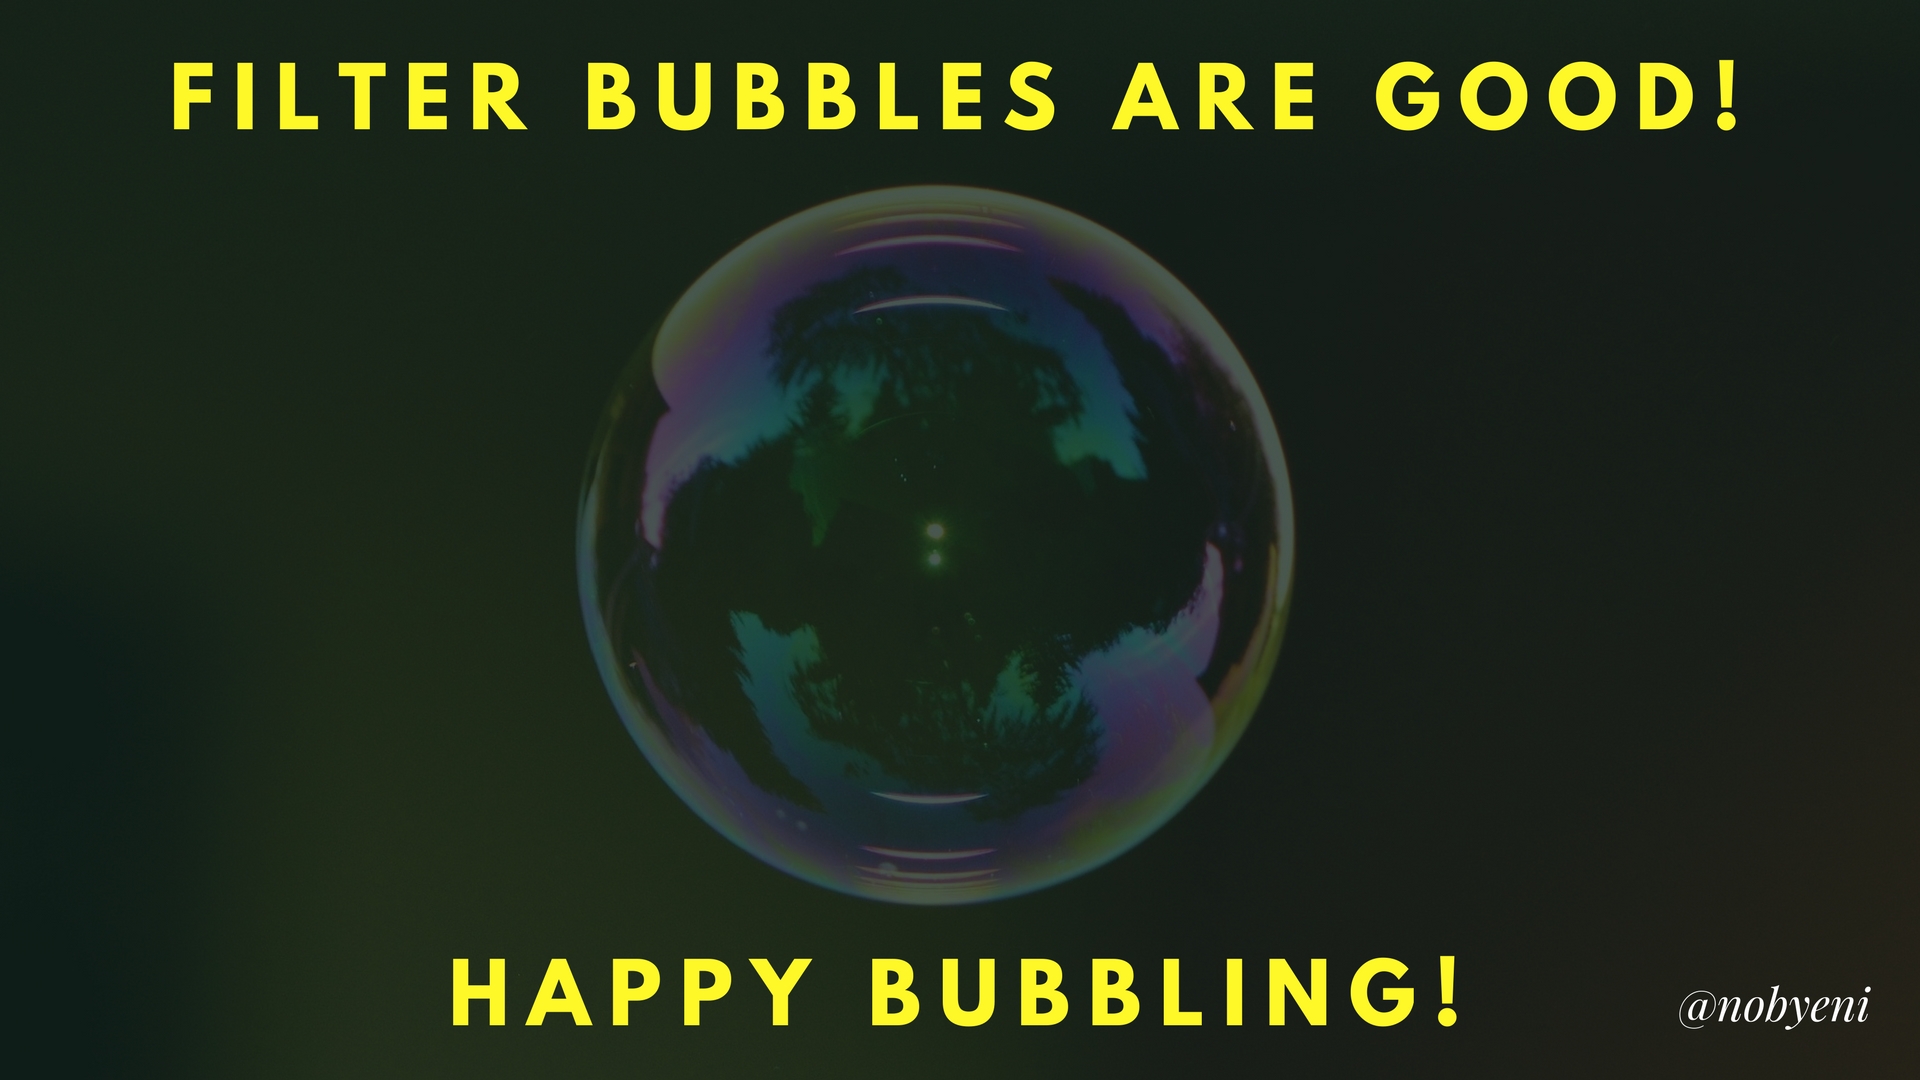 BUbbles are good!Happy bubbling!.jpg